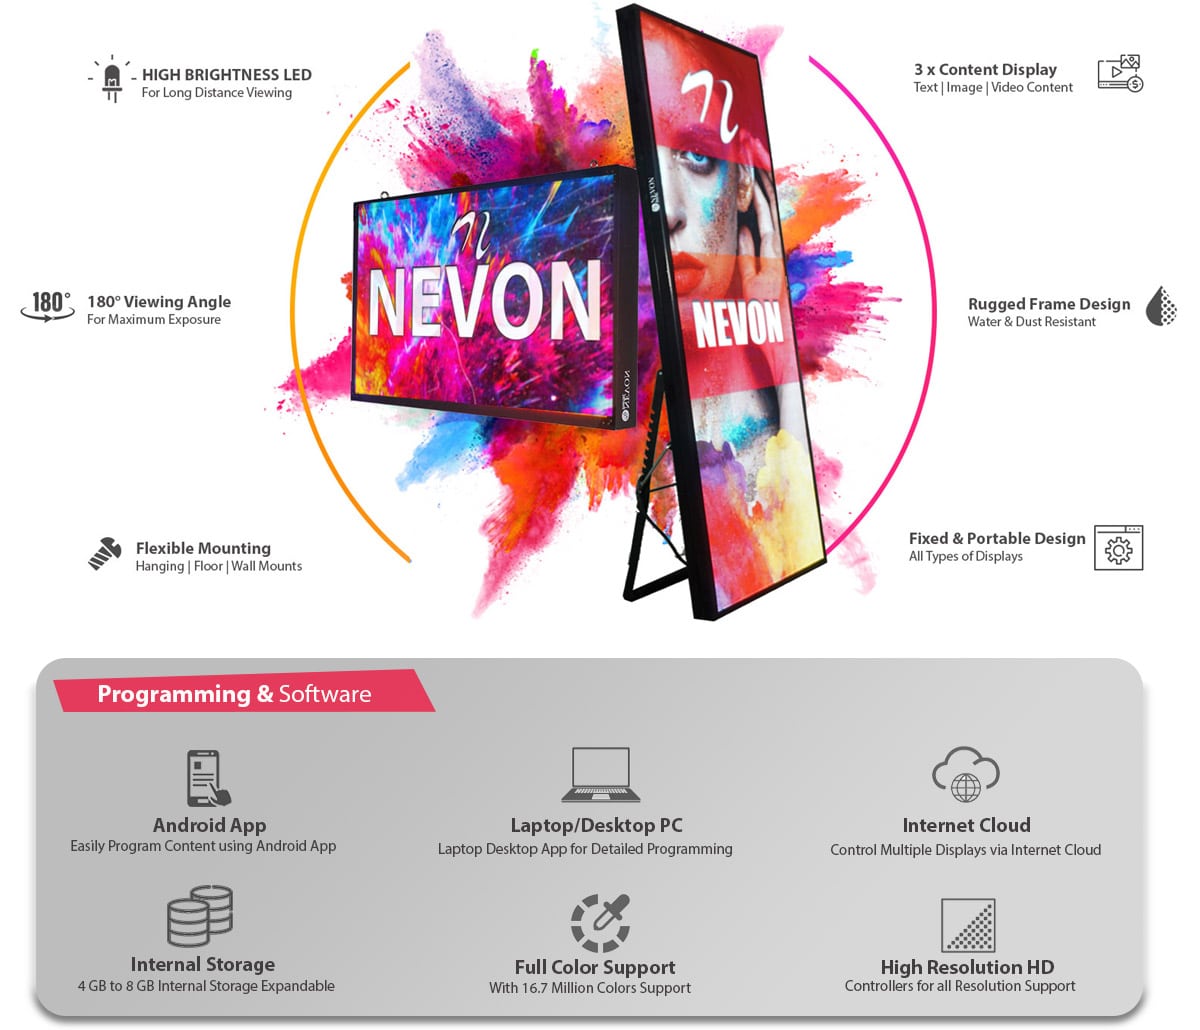 Nevon Display features latest-min